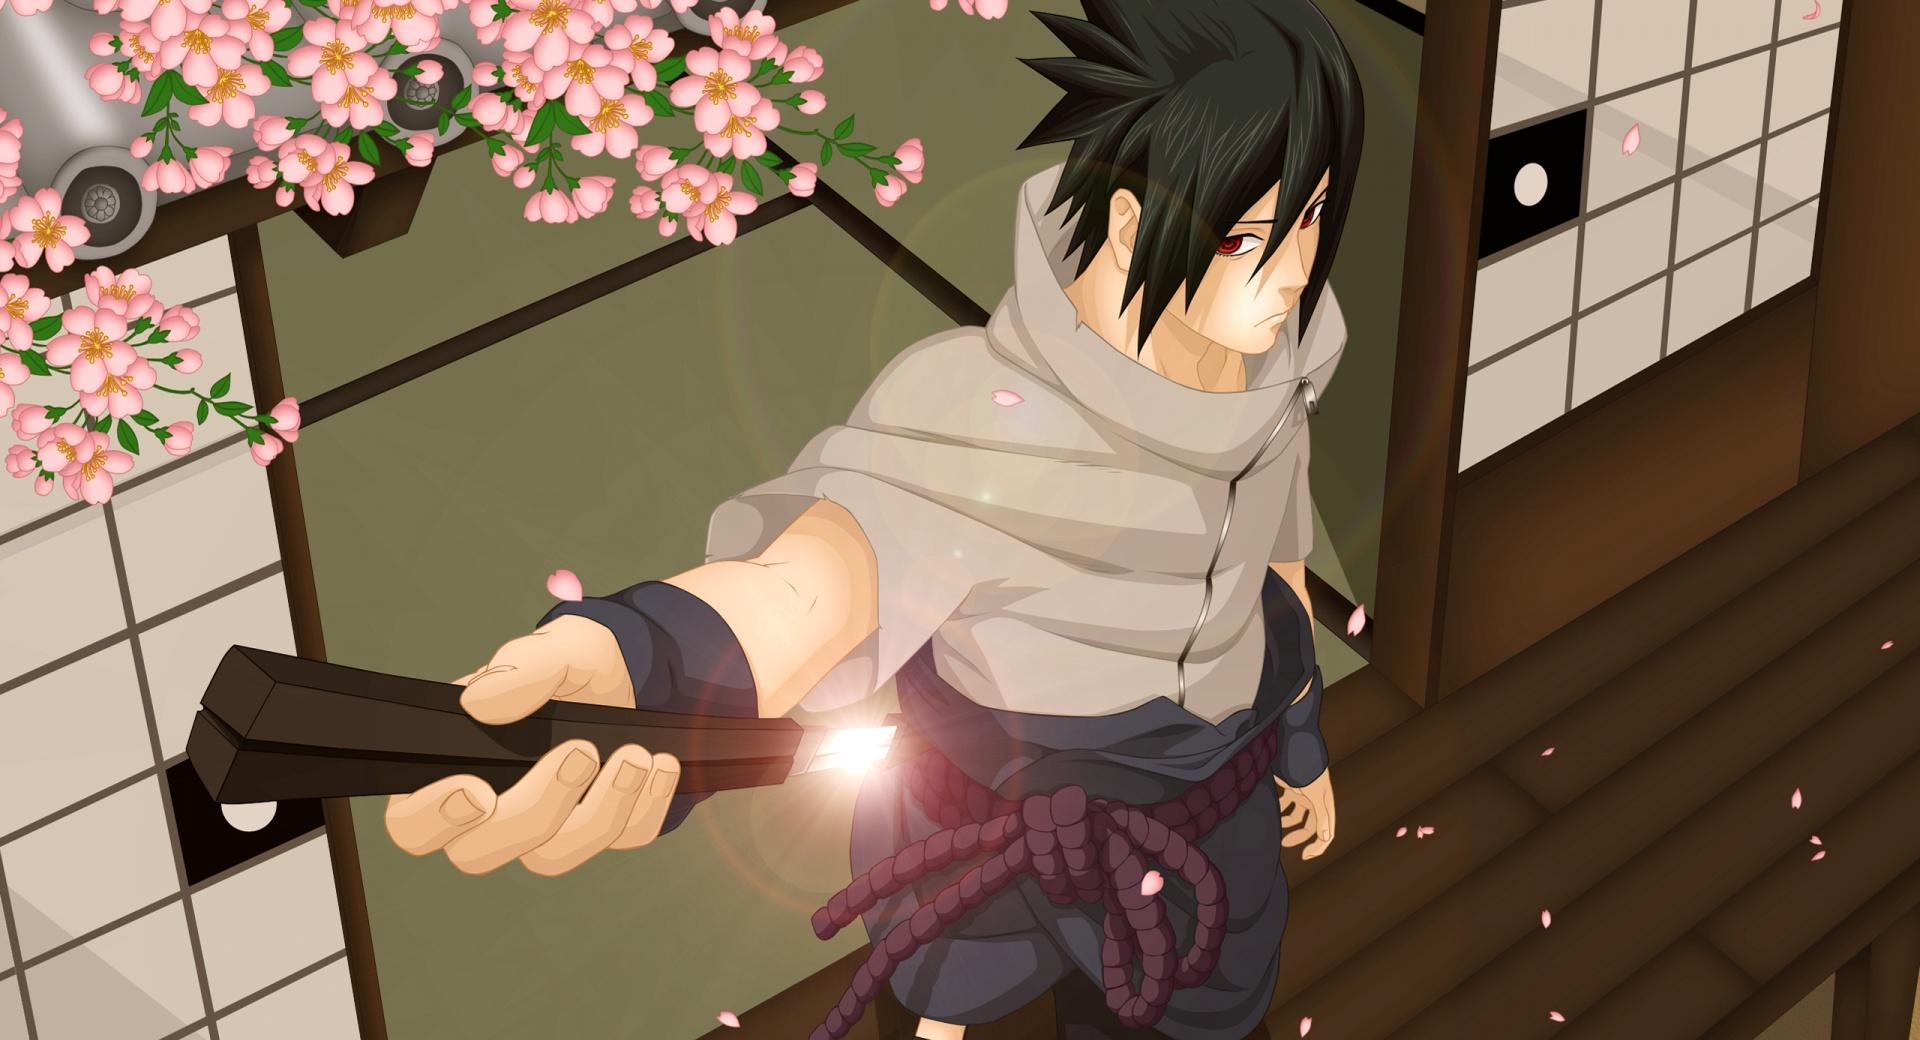 Naruto - Sasuke Before Battle at 1024 x 1024 iPad size wallpapers HD quality